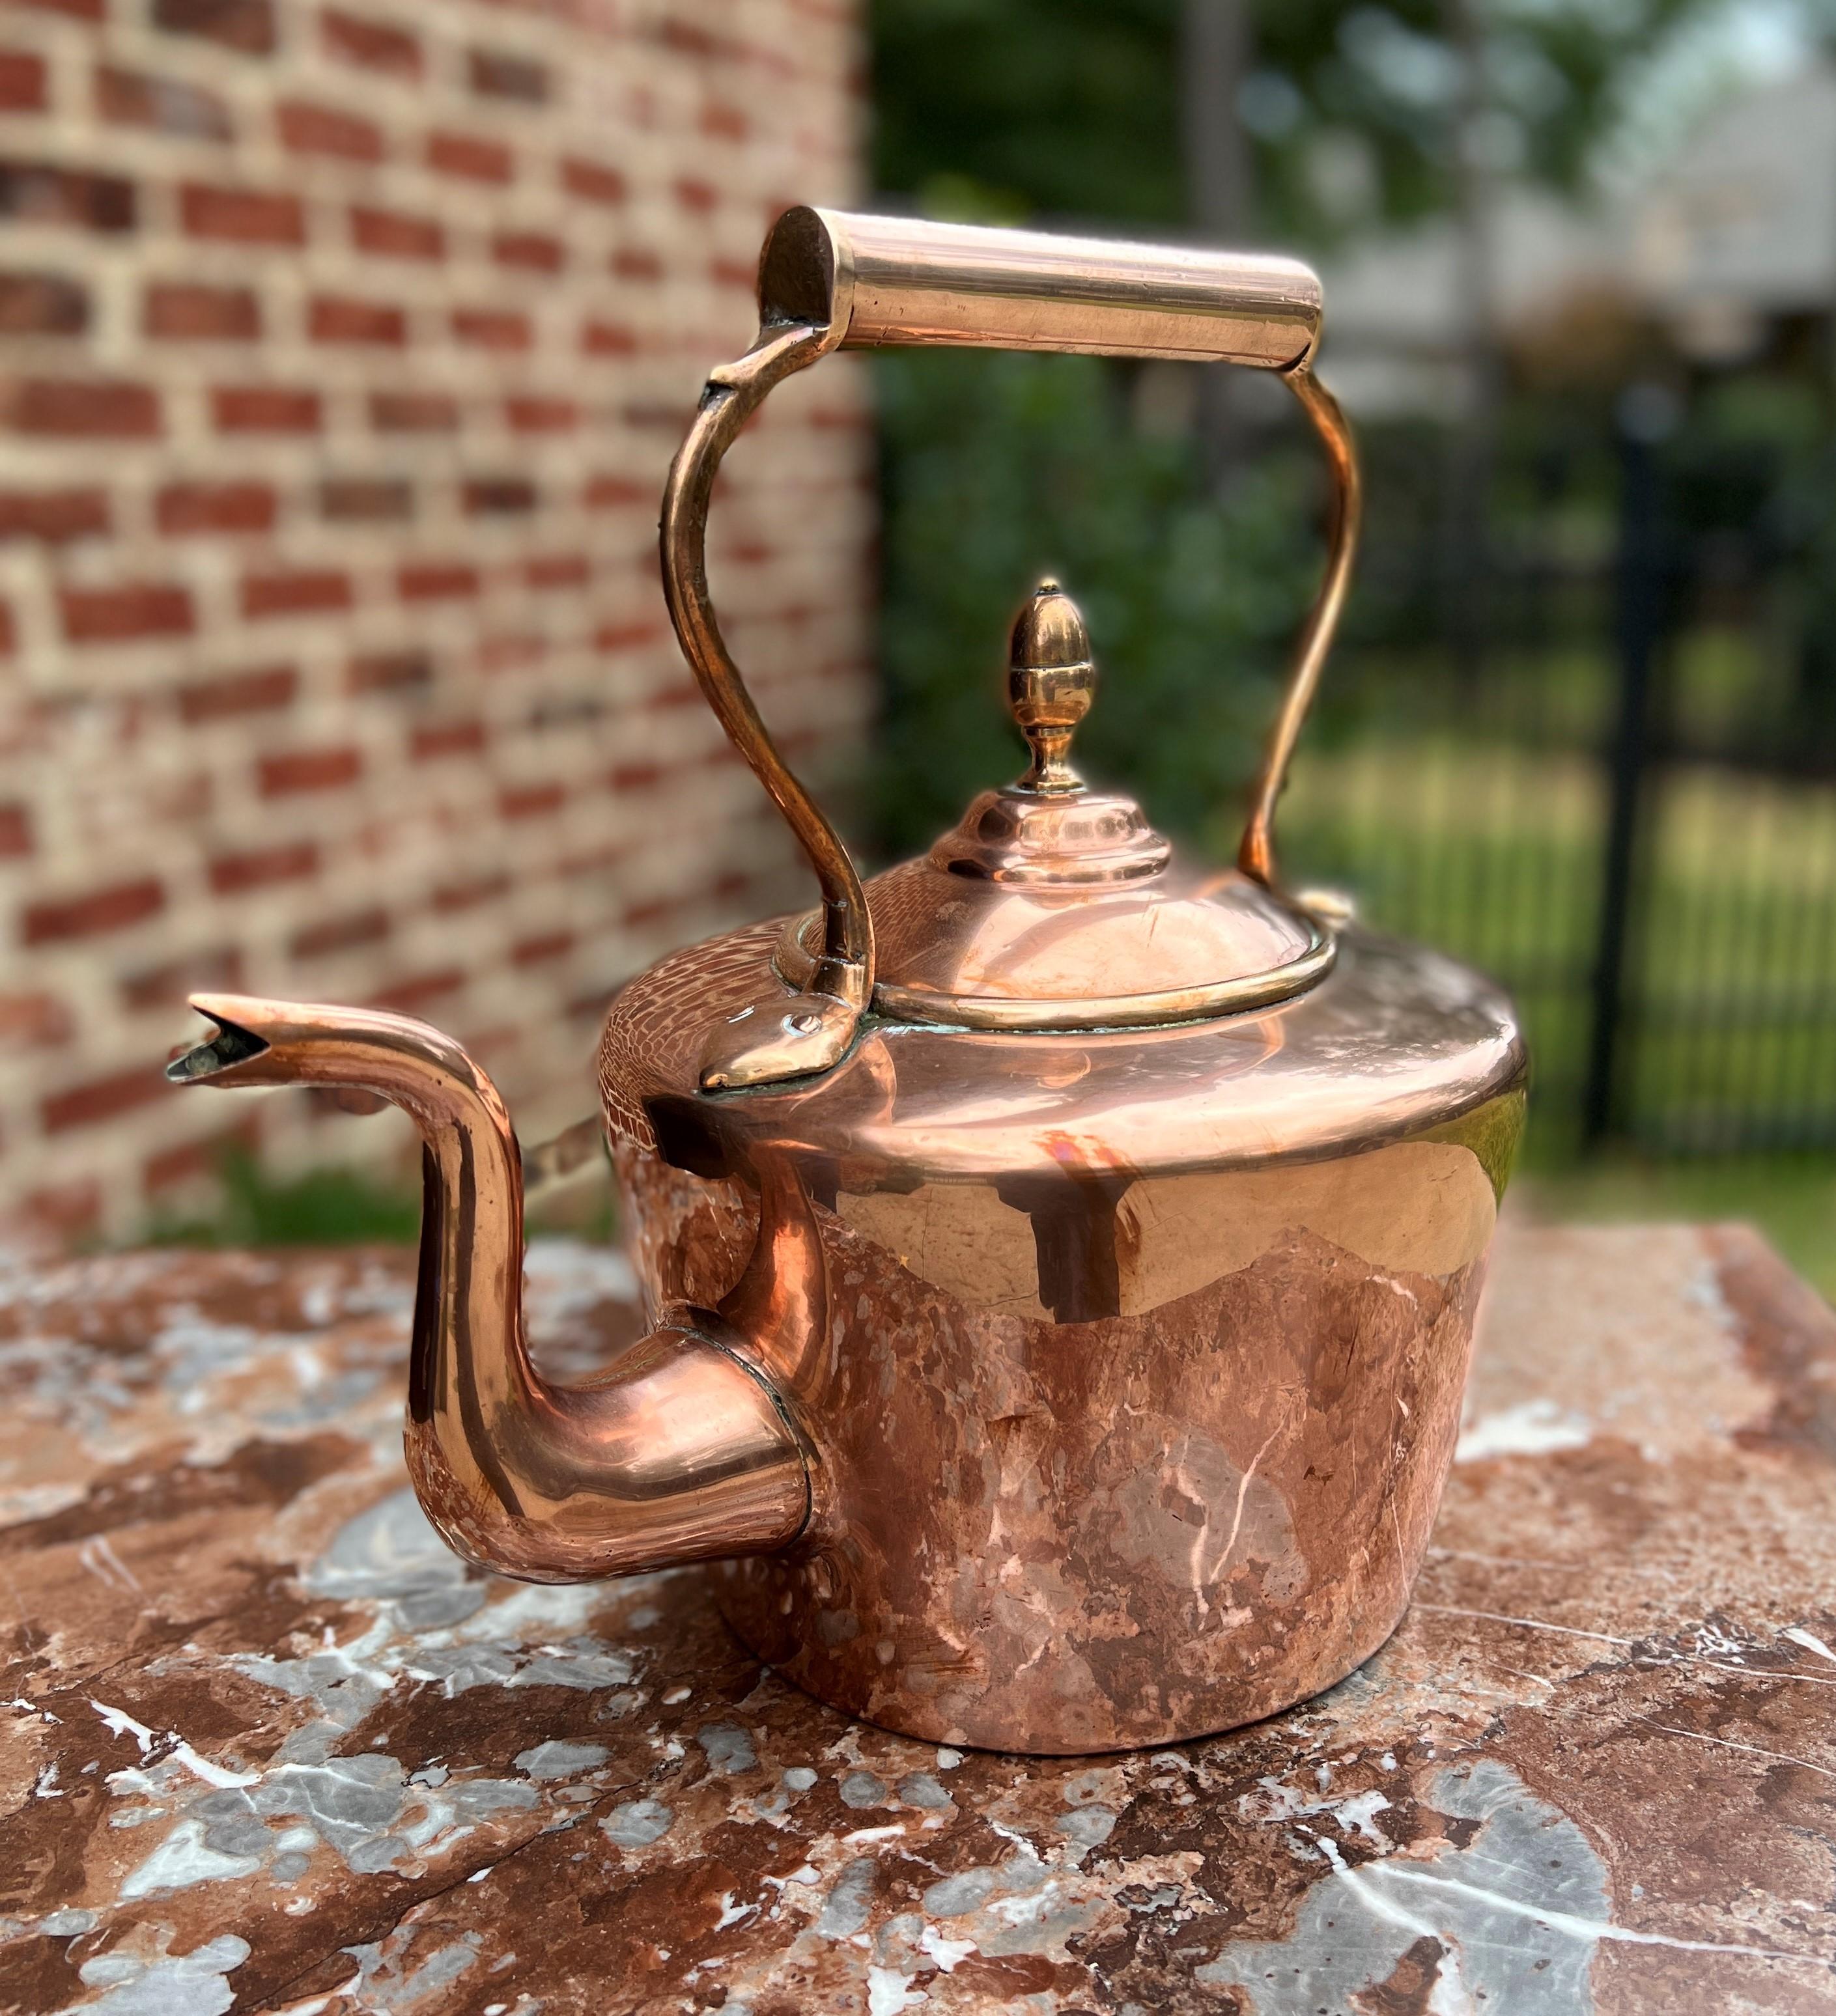 British Colonial Antique English Copper Brass Tea Kettle Coffee Pitcher Spout Handle #1 c. 1900 For Sale